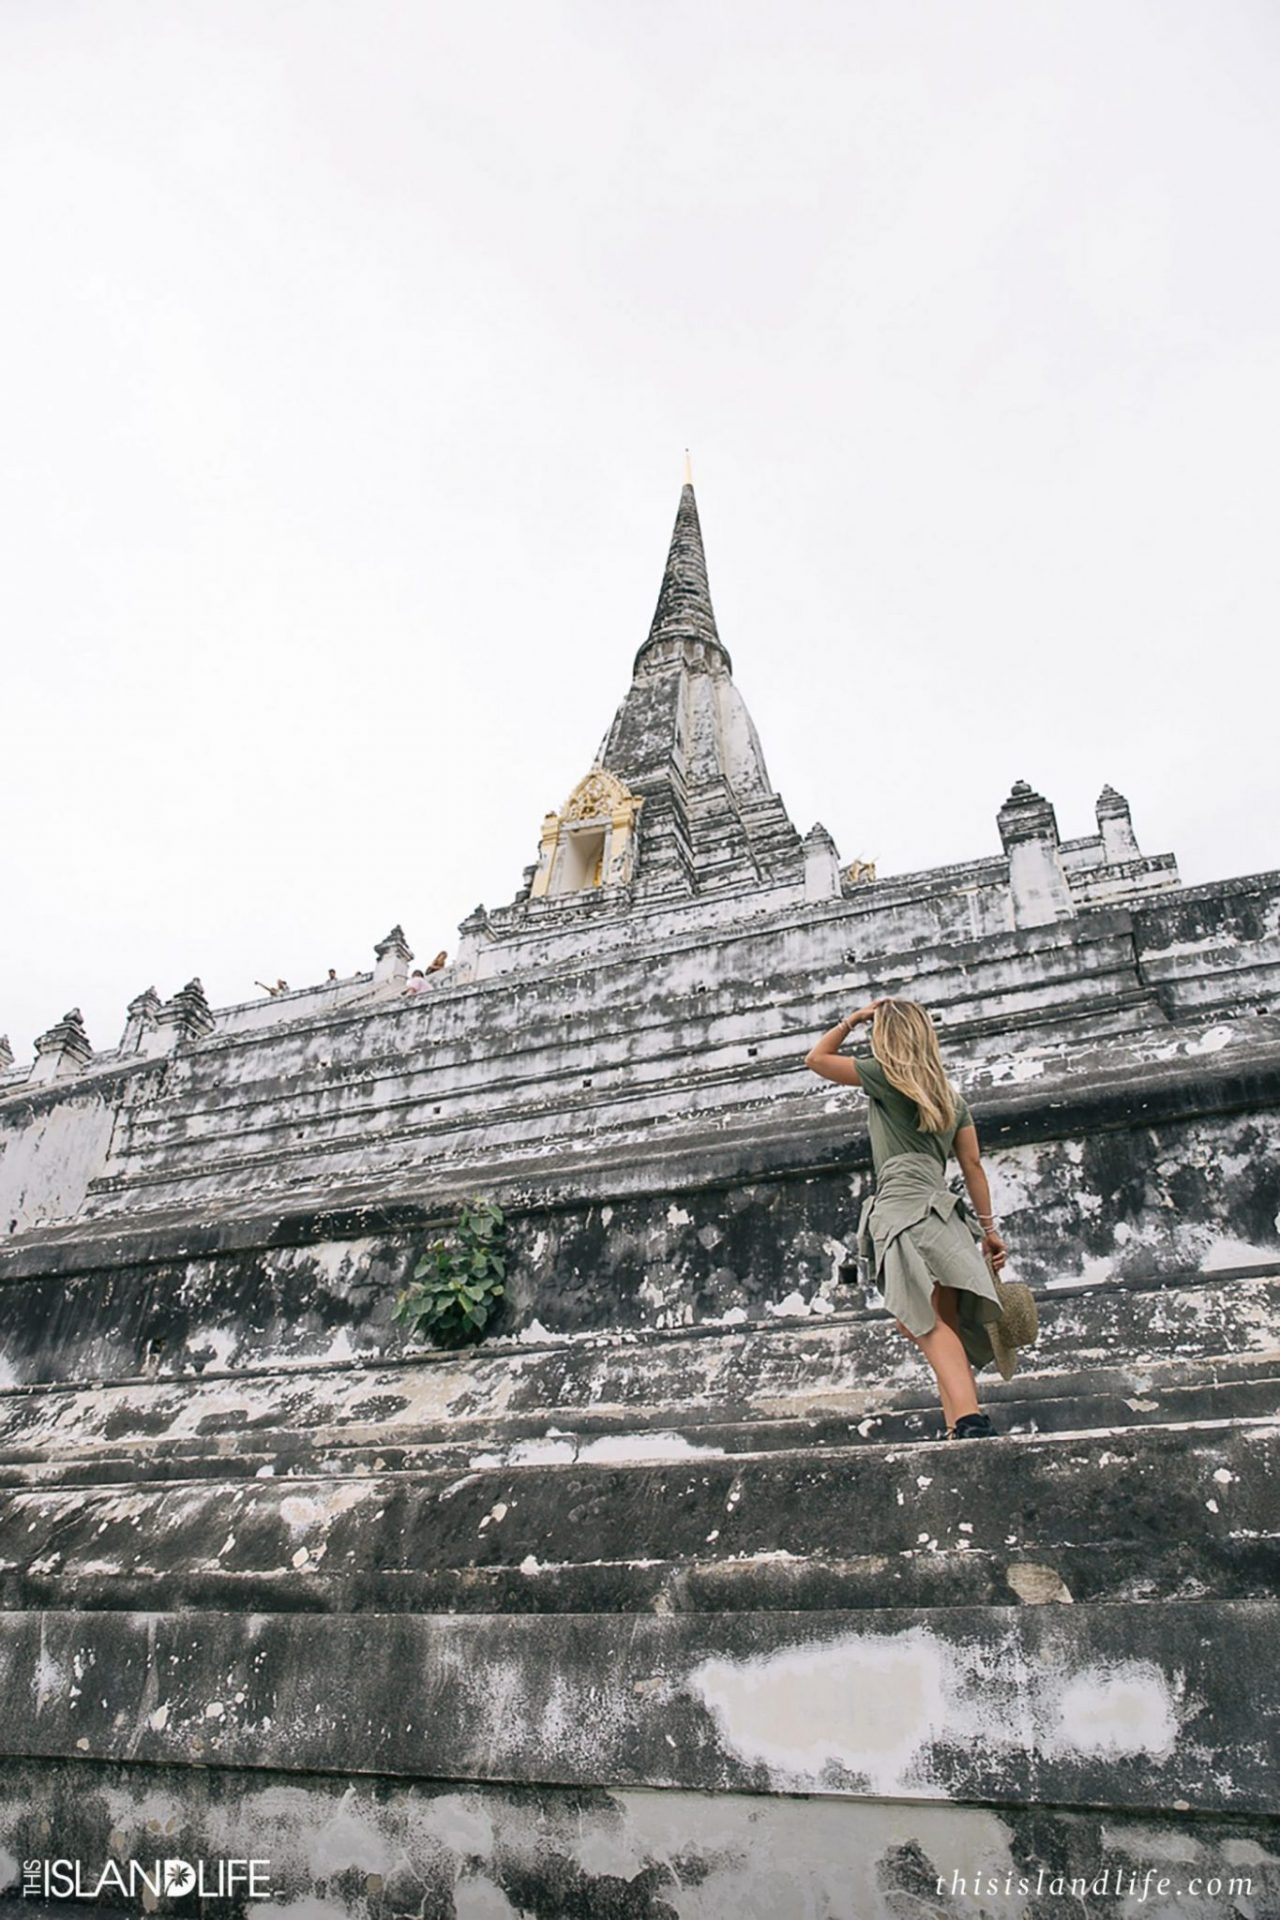 This Island Life | The ancient island kingdom of Ayutthaya